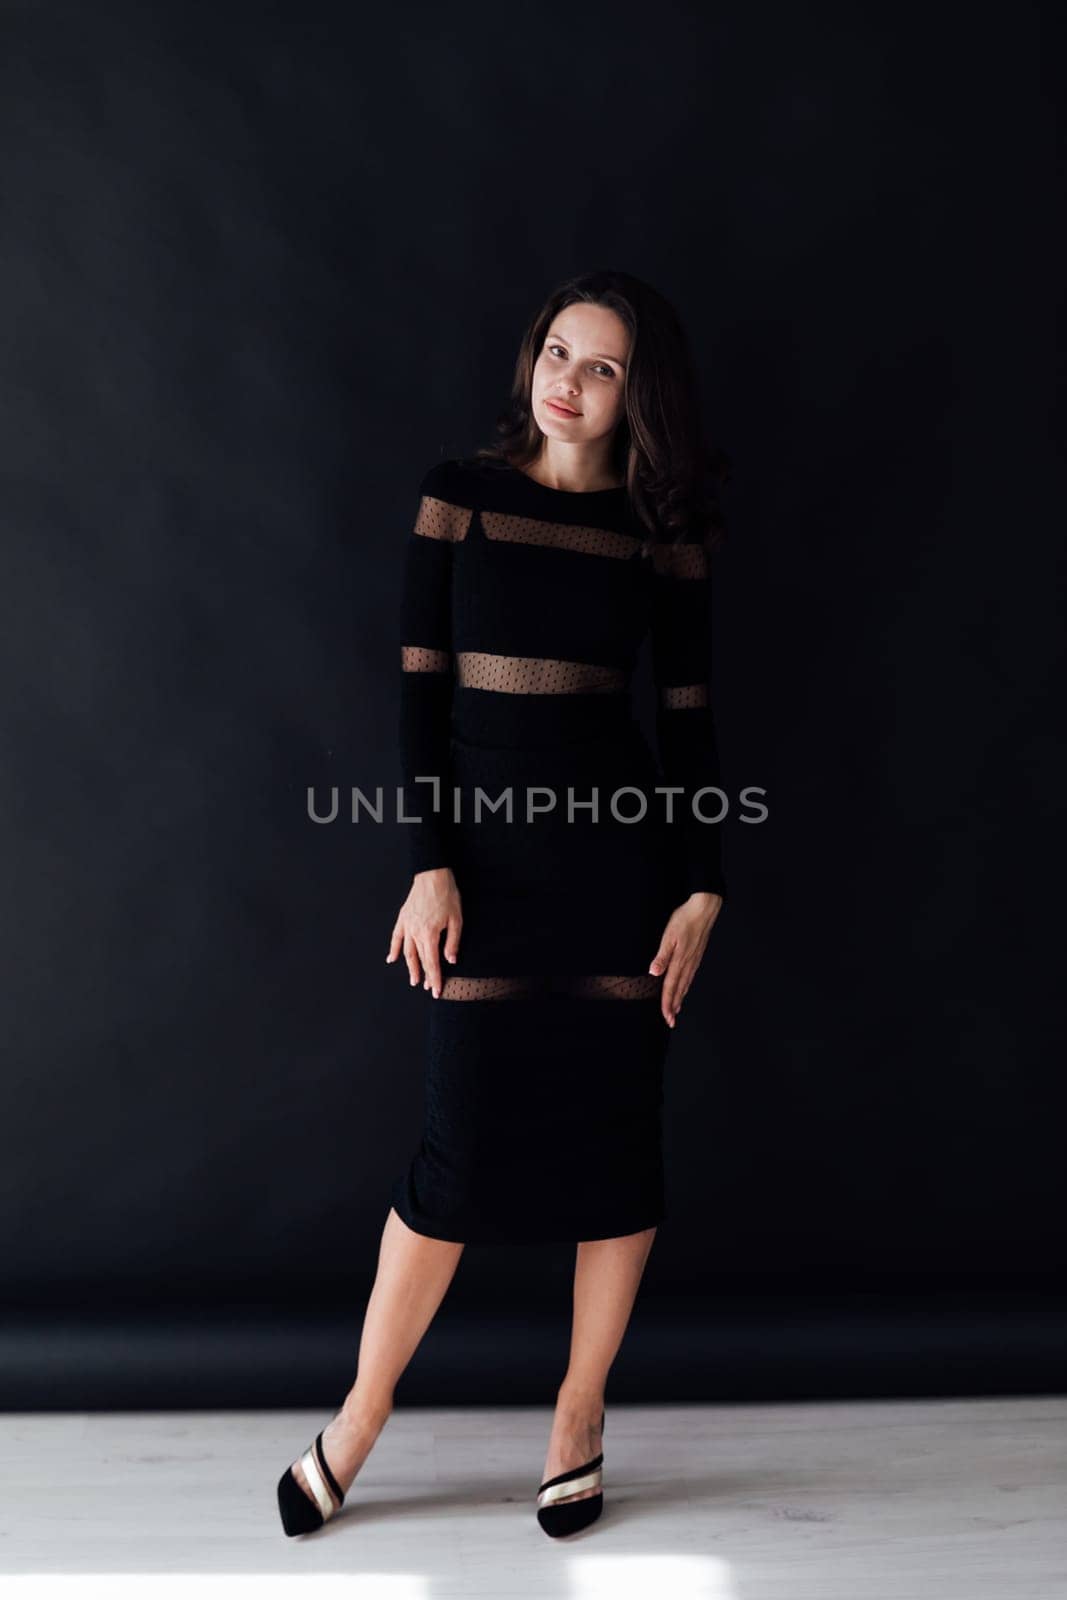 brunette in a dark dress poses on a dark background by Simakov